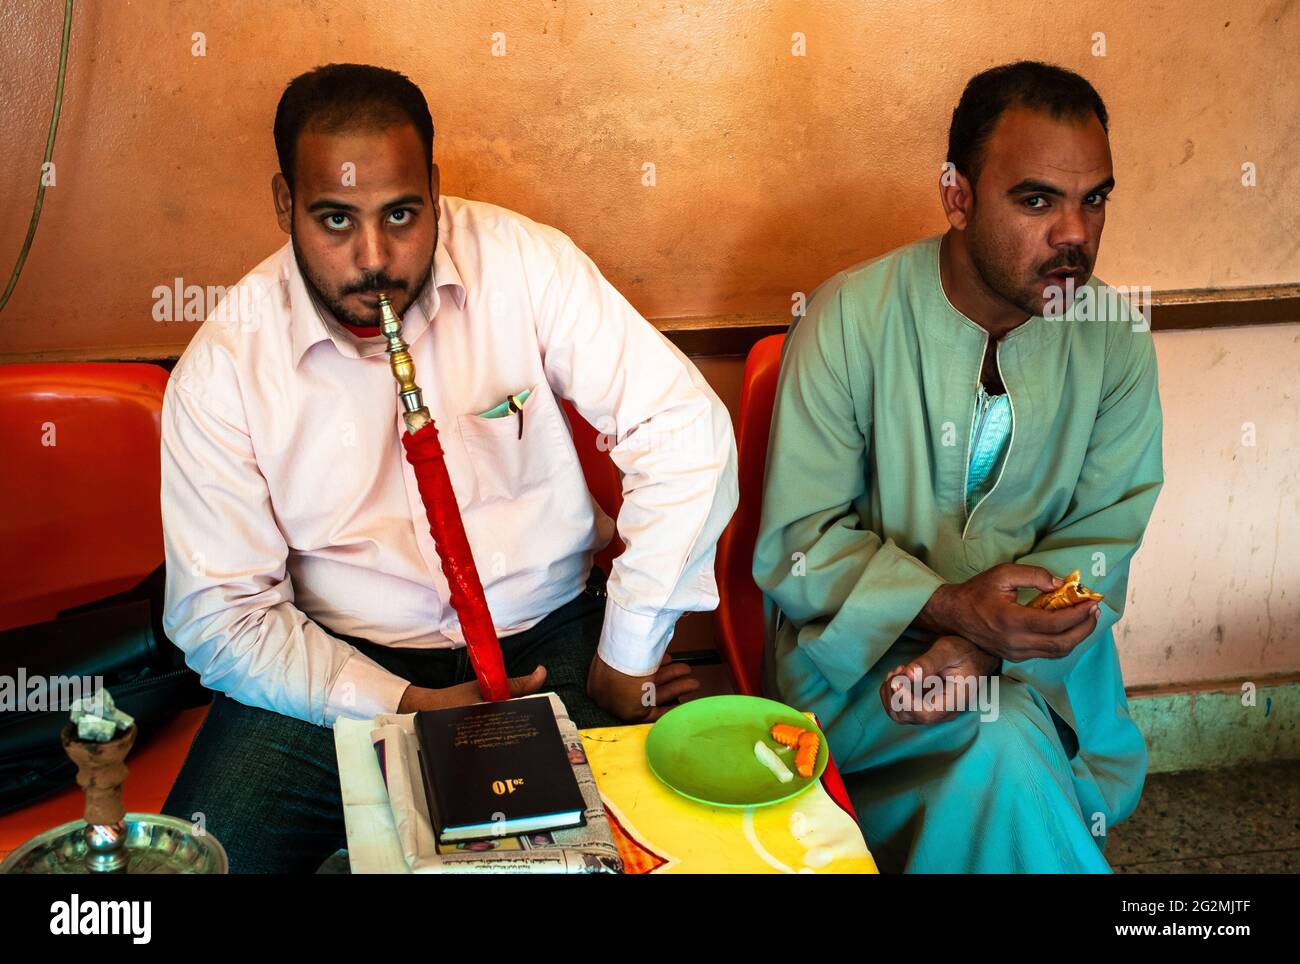 Aswan, Egypt - January 4 2011: Egyptian Man Smoking a Shisha Water Pipe or Hookah in a Cafe Stock Photo